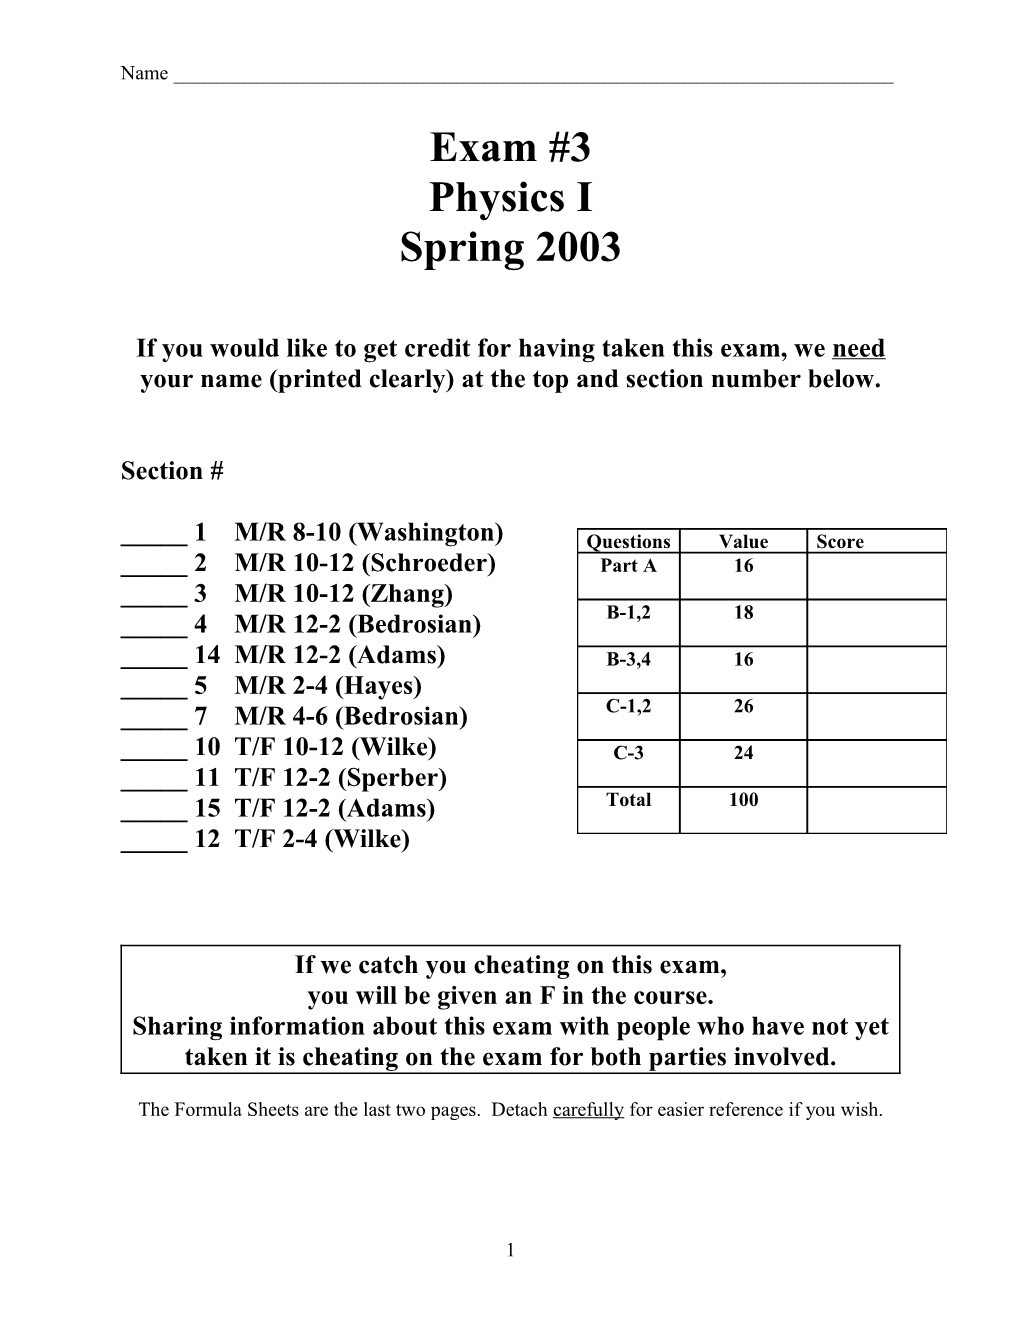 Physics I Exam 3 Spring 2003